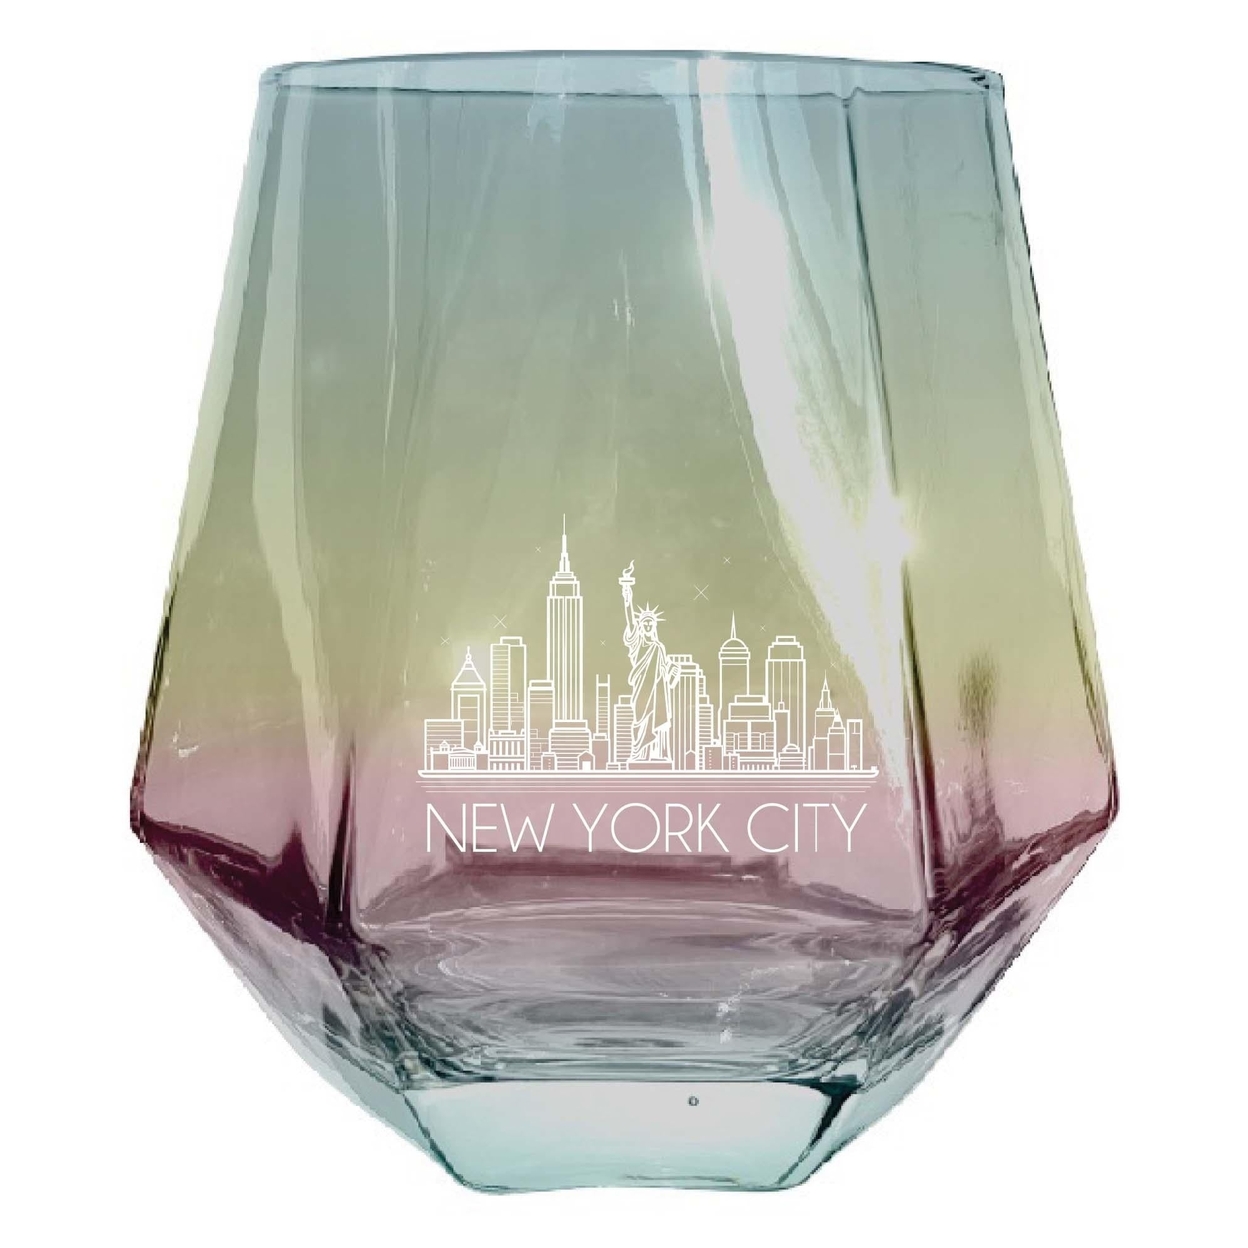 New York City Souvenir Wine Glass EngravedDiamond 15 Oz - Iridescent,,4-Pack